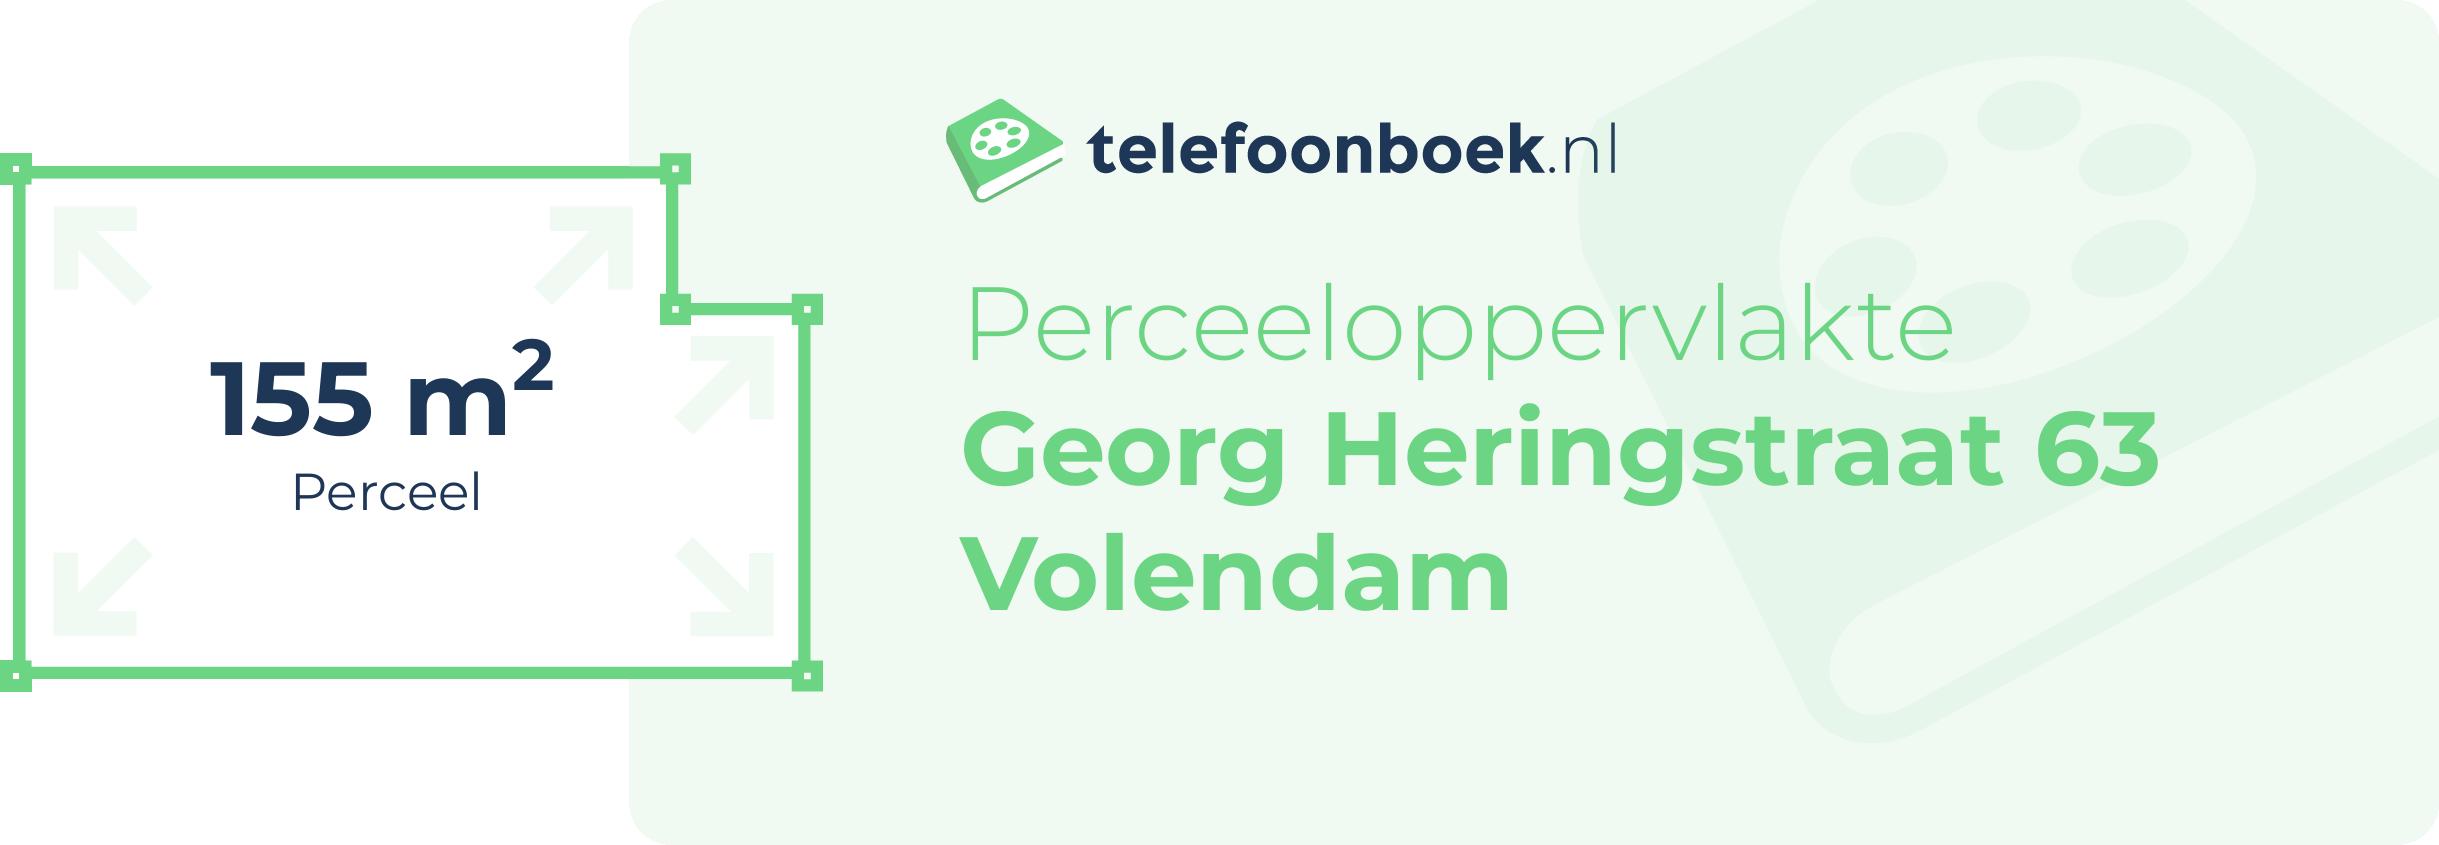 Perceeloppervlakte Georg Heringstraat 63 Volendam